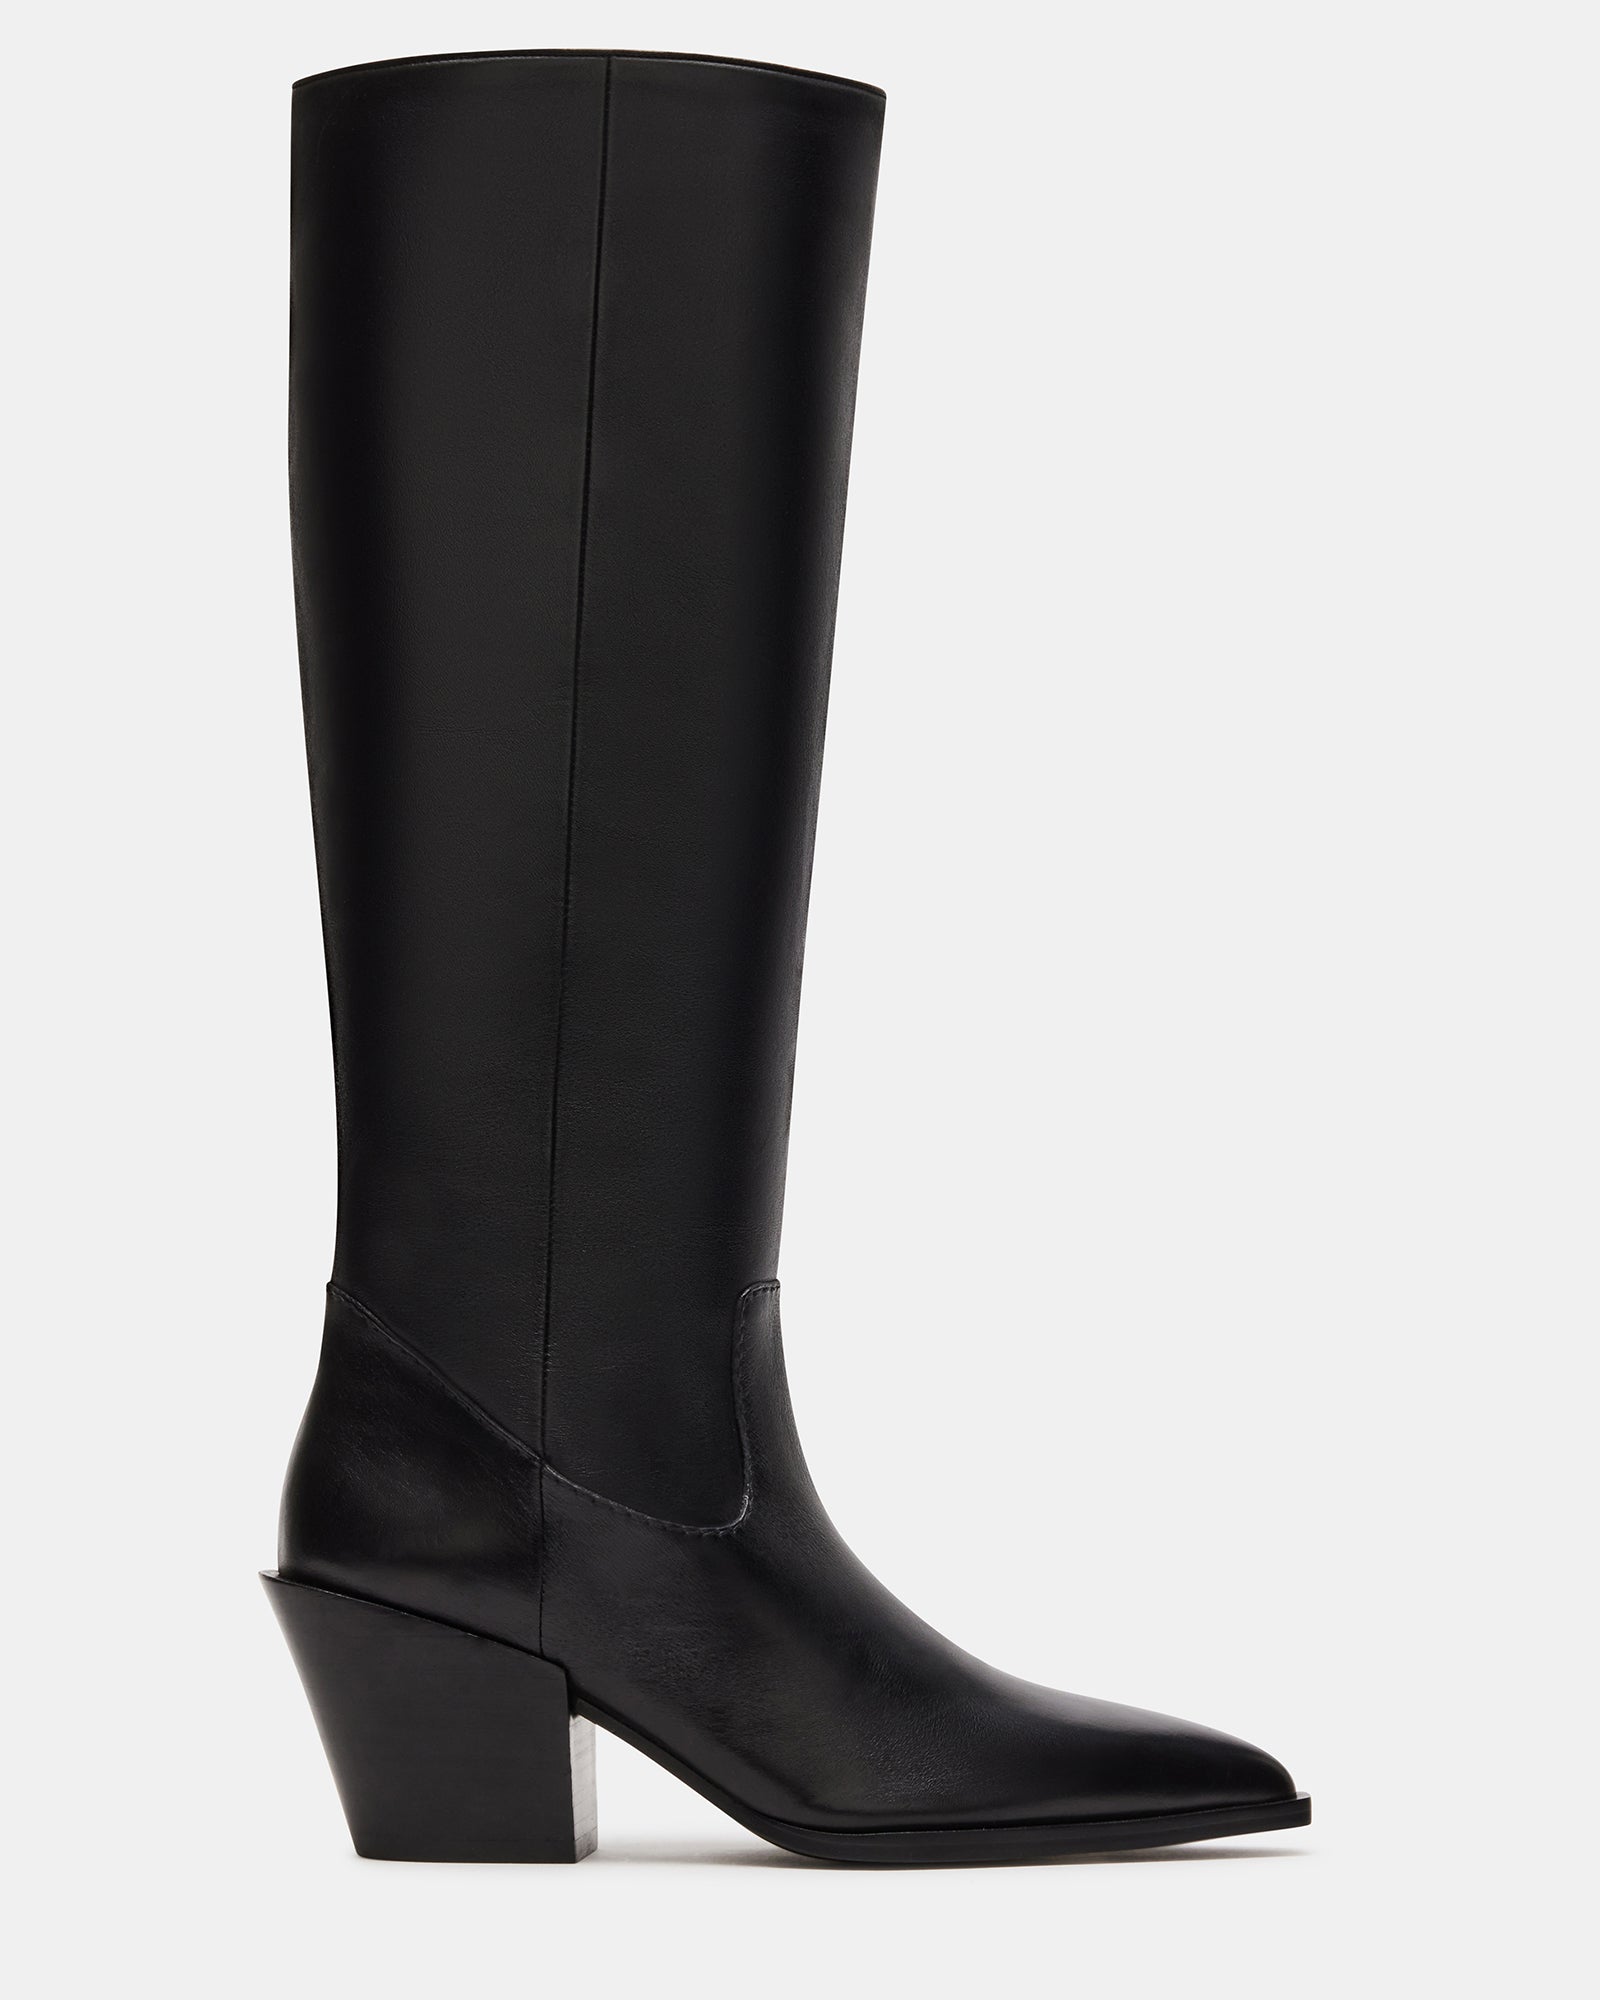 TARA Black Leather Knee High Boot | Women's Boots – Steve Madden